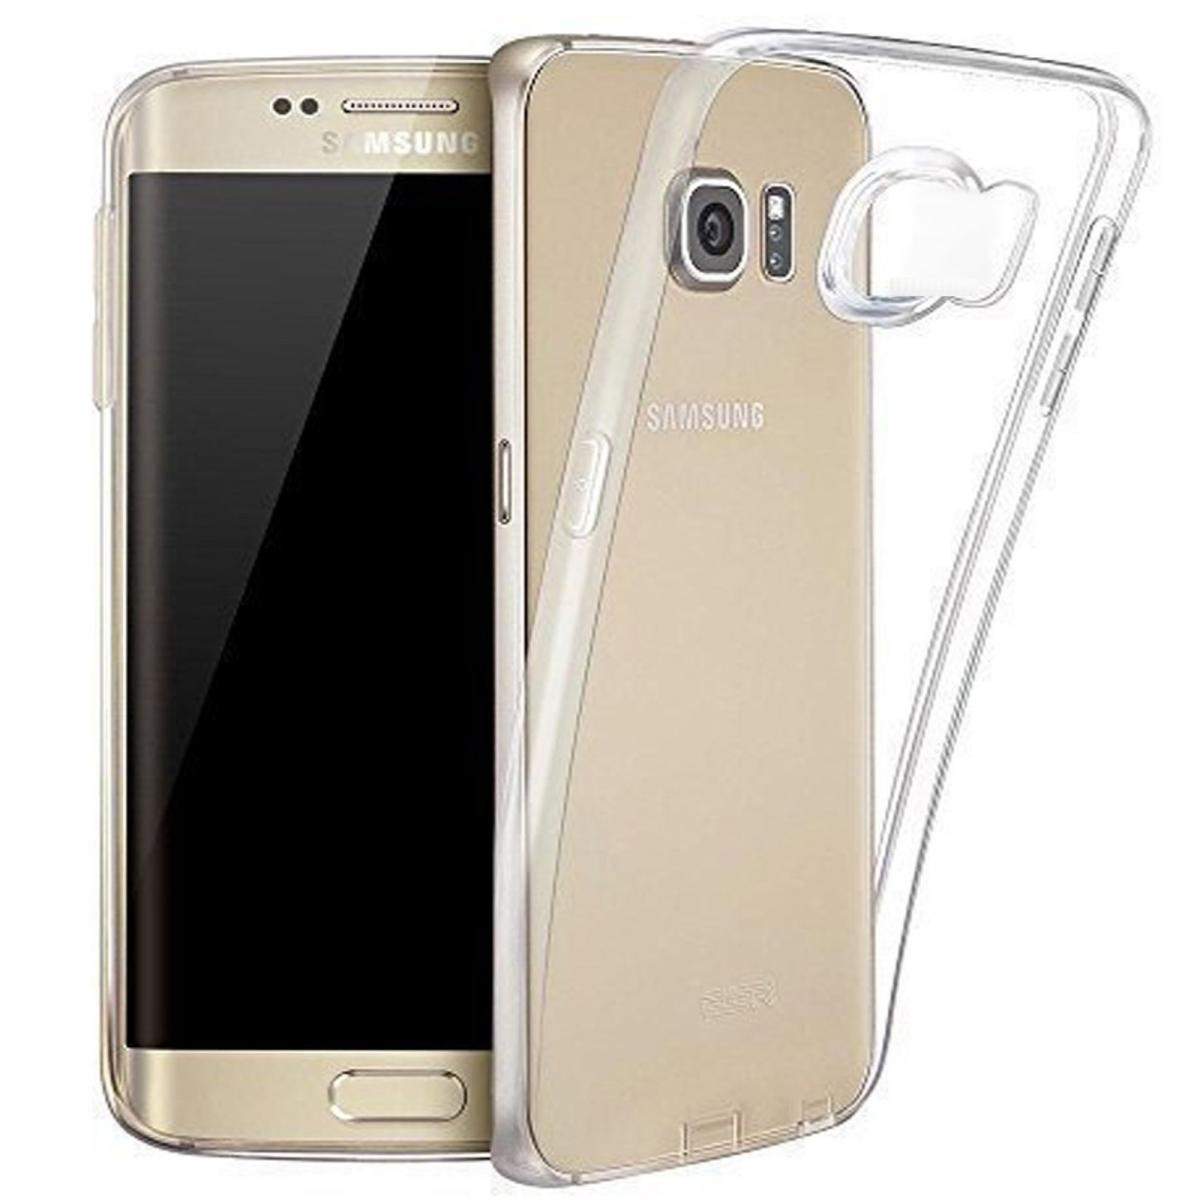 Triángulo Funda para Samsung Galaxy S6 Edge Carcasas Flexible TPU Silicona Transparente Ultra Fina Ultra Ligero Gel Shock-Absorción,Anti-Arañazos y Anti-Choque Bumper Protectora Funda 